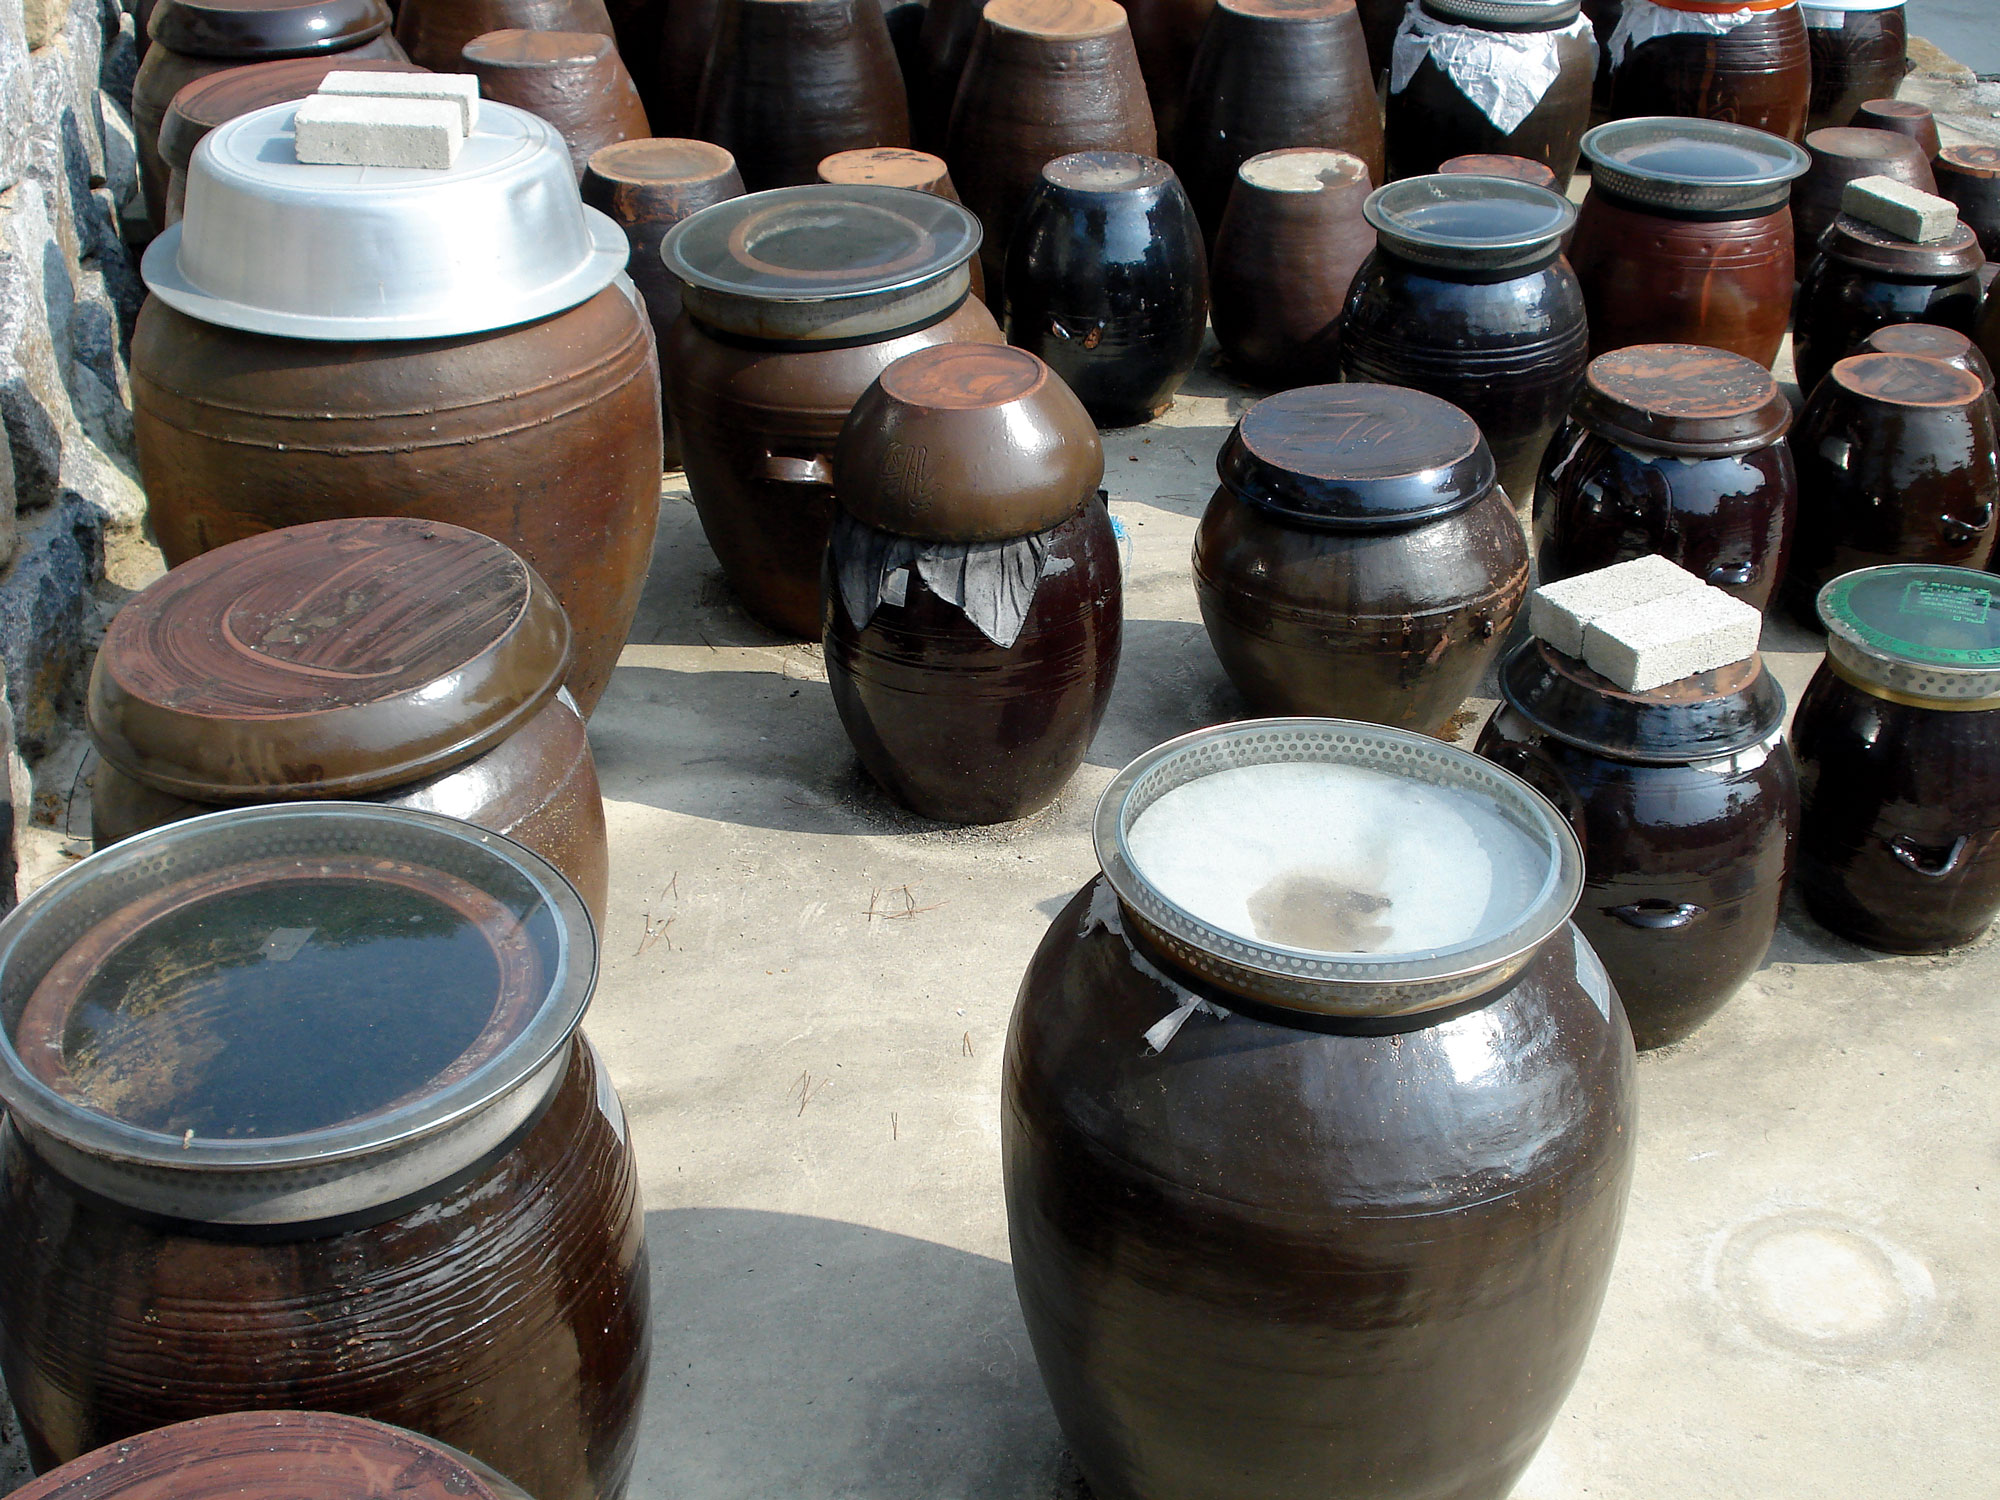 Ceramic jugs of various sizes fermenting kimchi